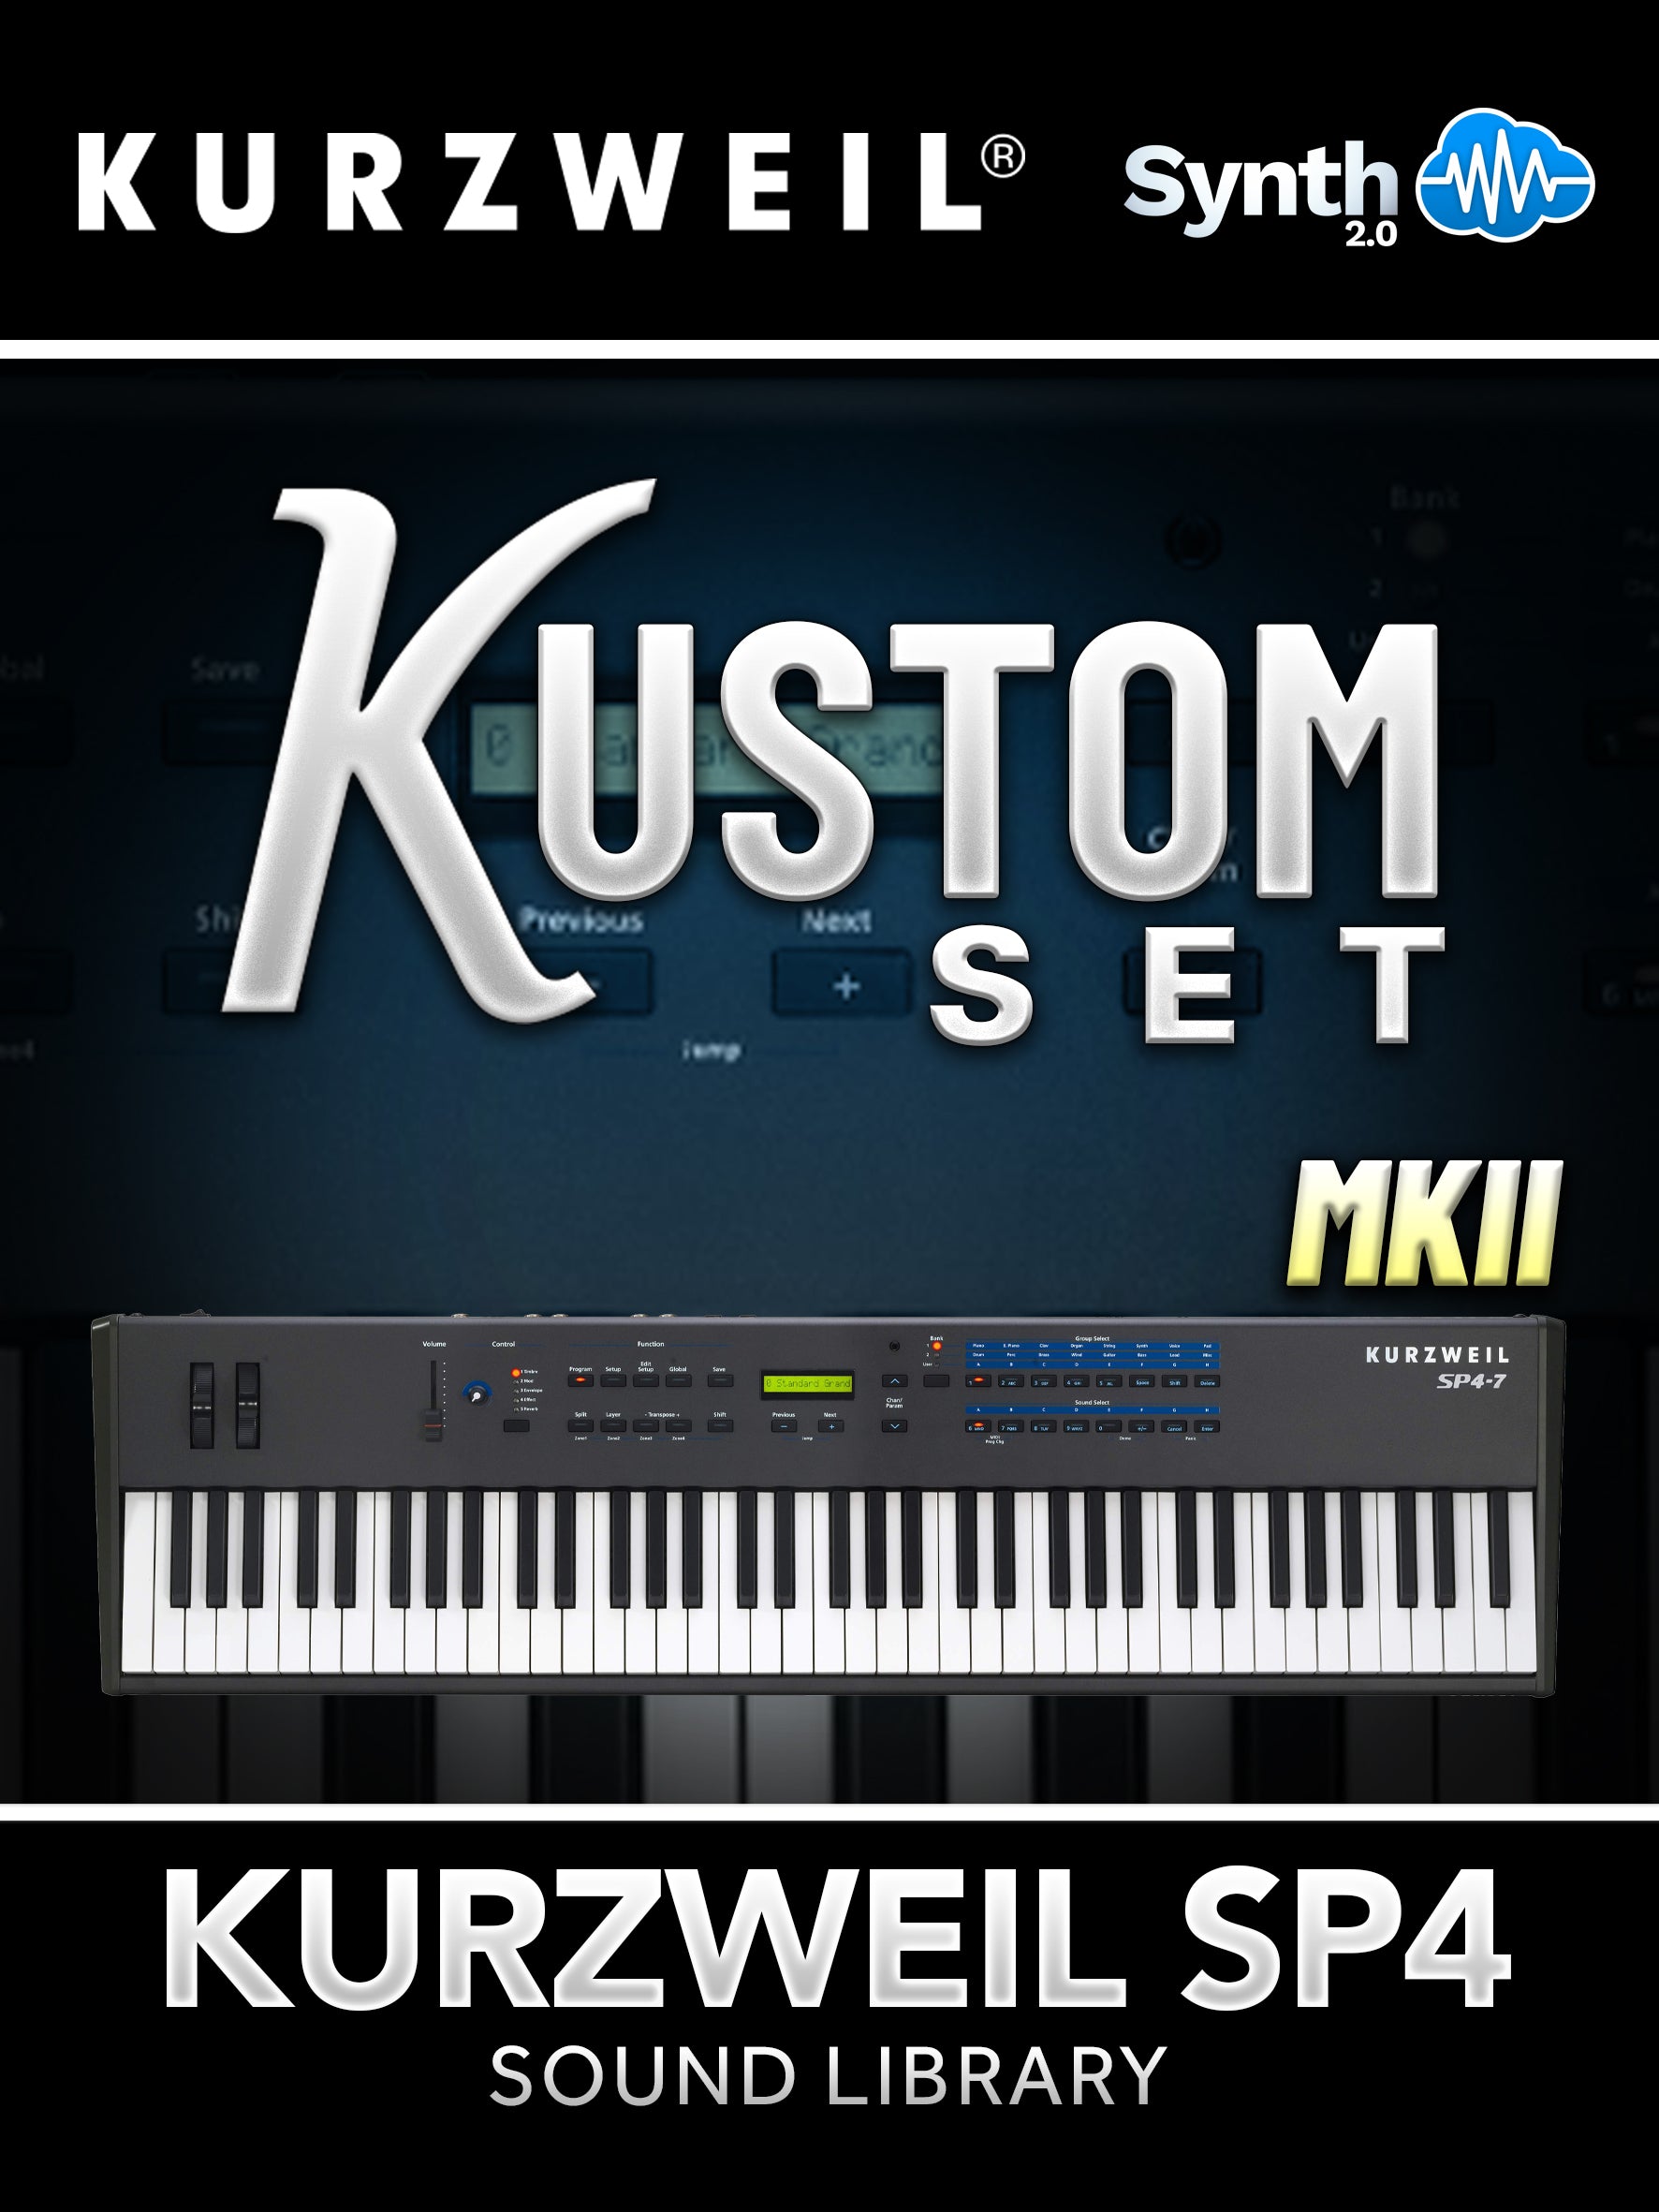 LDX134 - Kustom Set MKII - Kurzweil SP4 ( 35 presets )